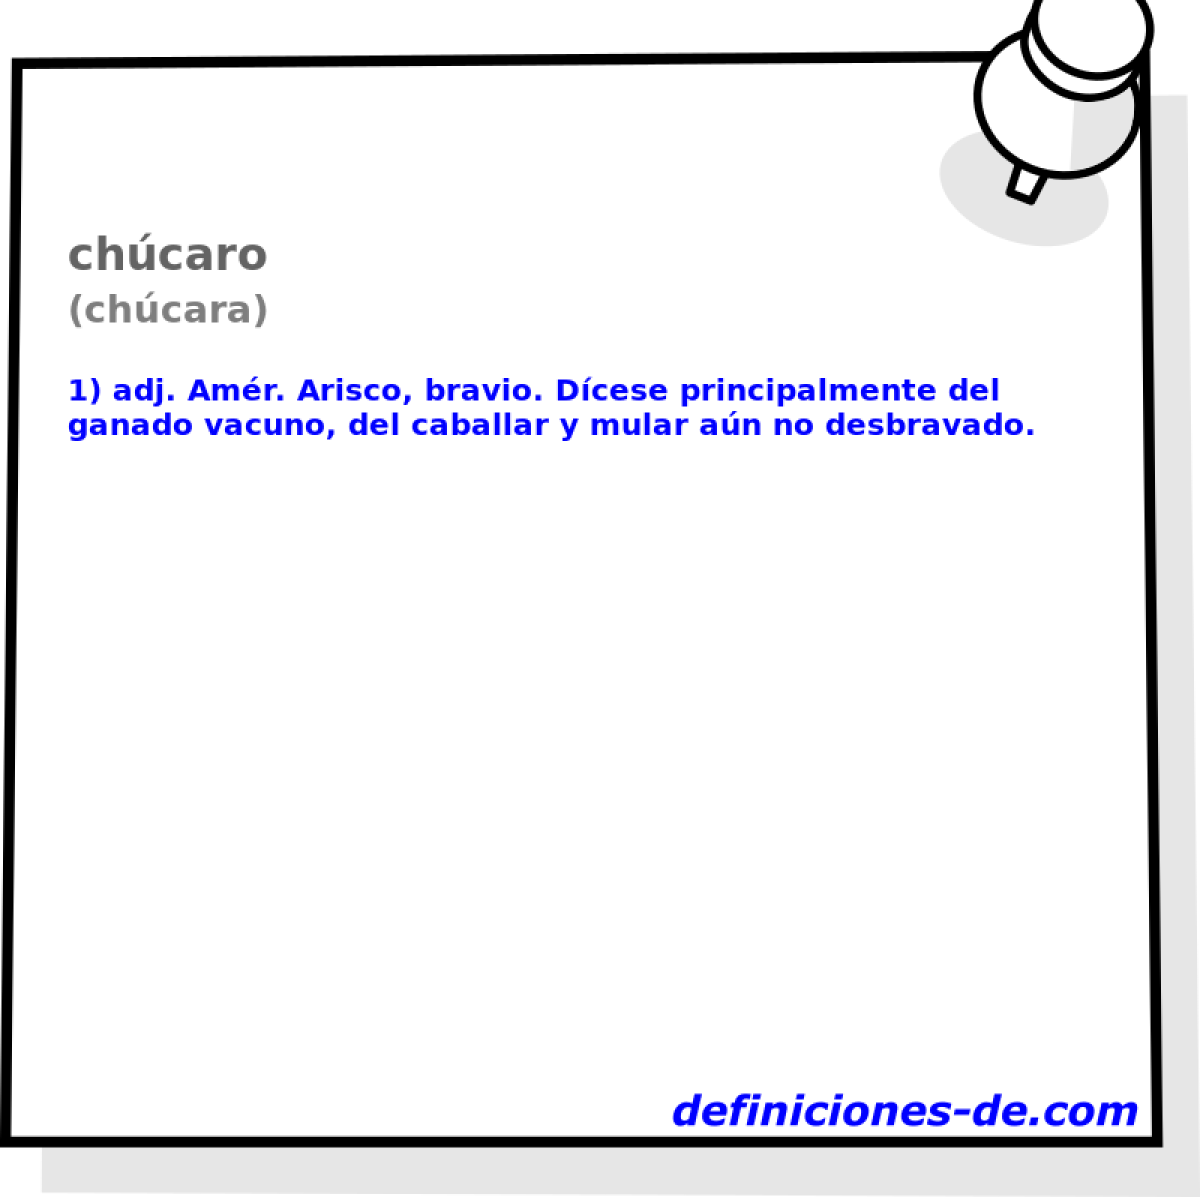 chcaro (chcara)